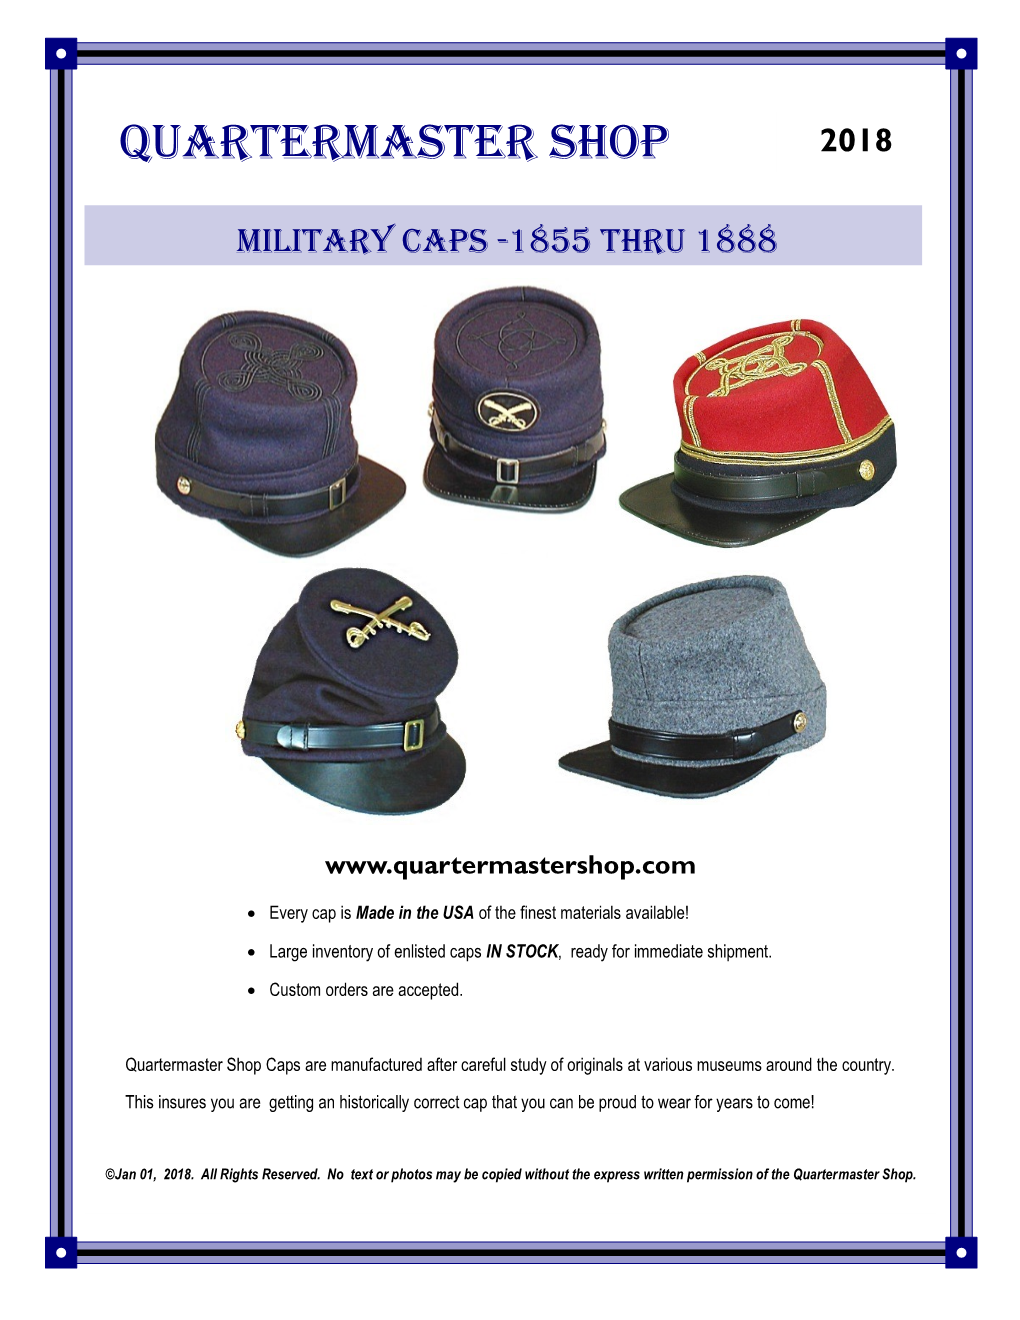 MILITARY Caps -1855 THRU 1888